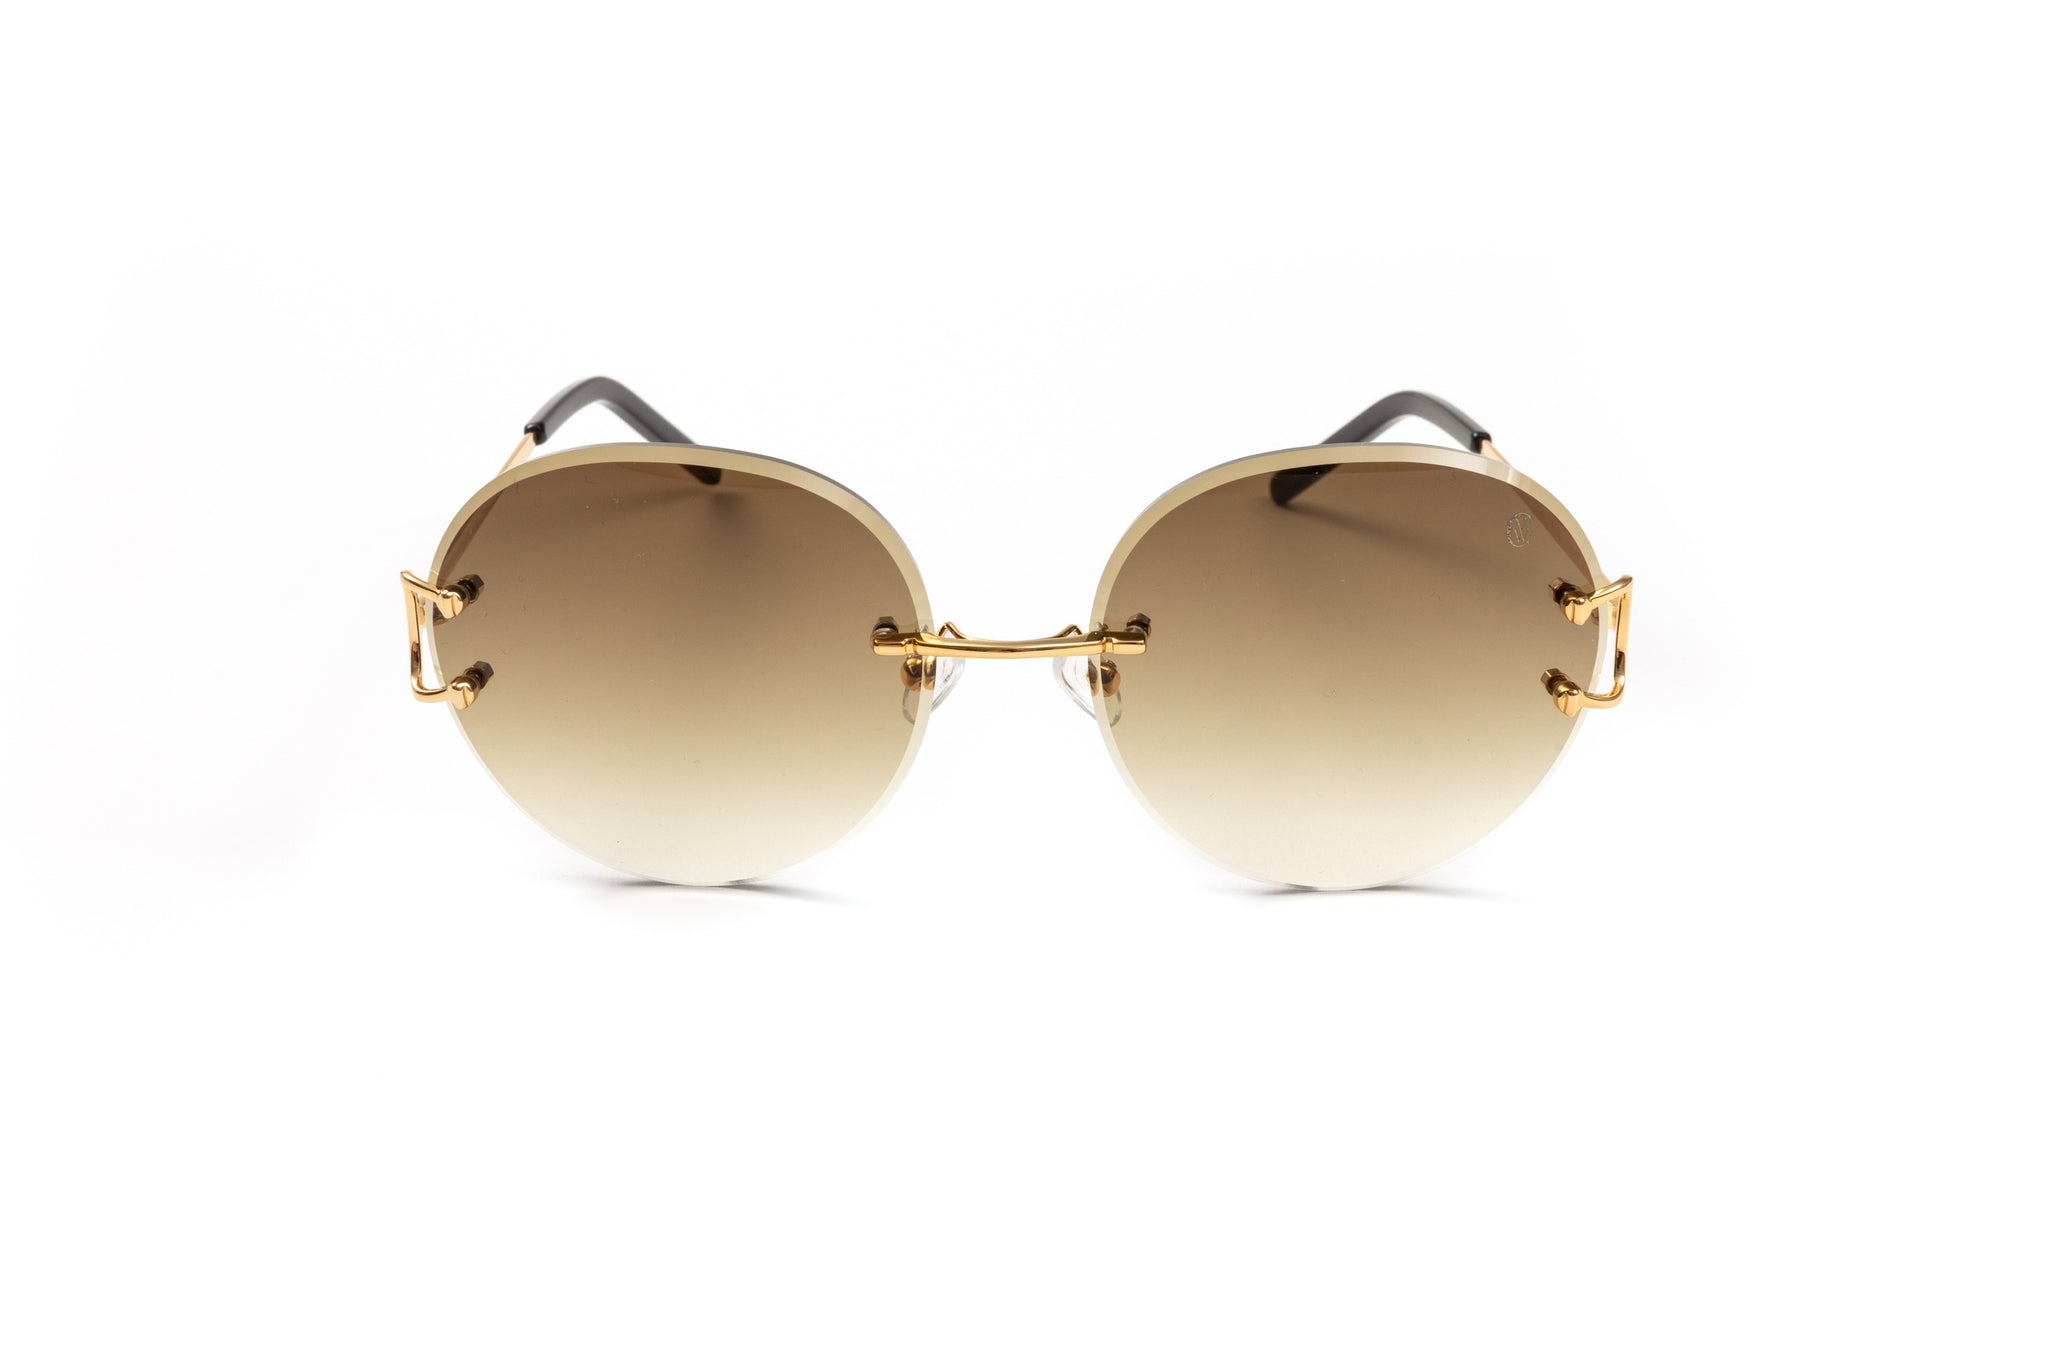 18kt gold classic c sunglasses frame gradient brown lenses